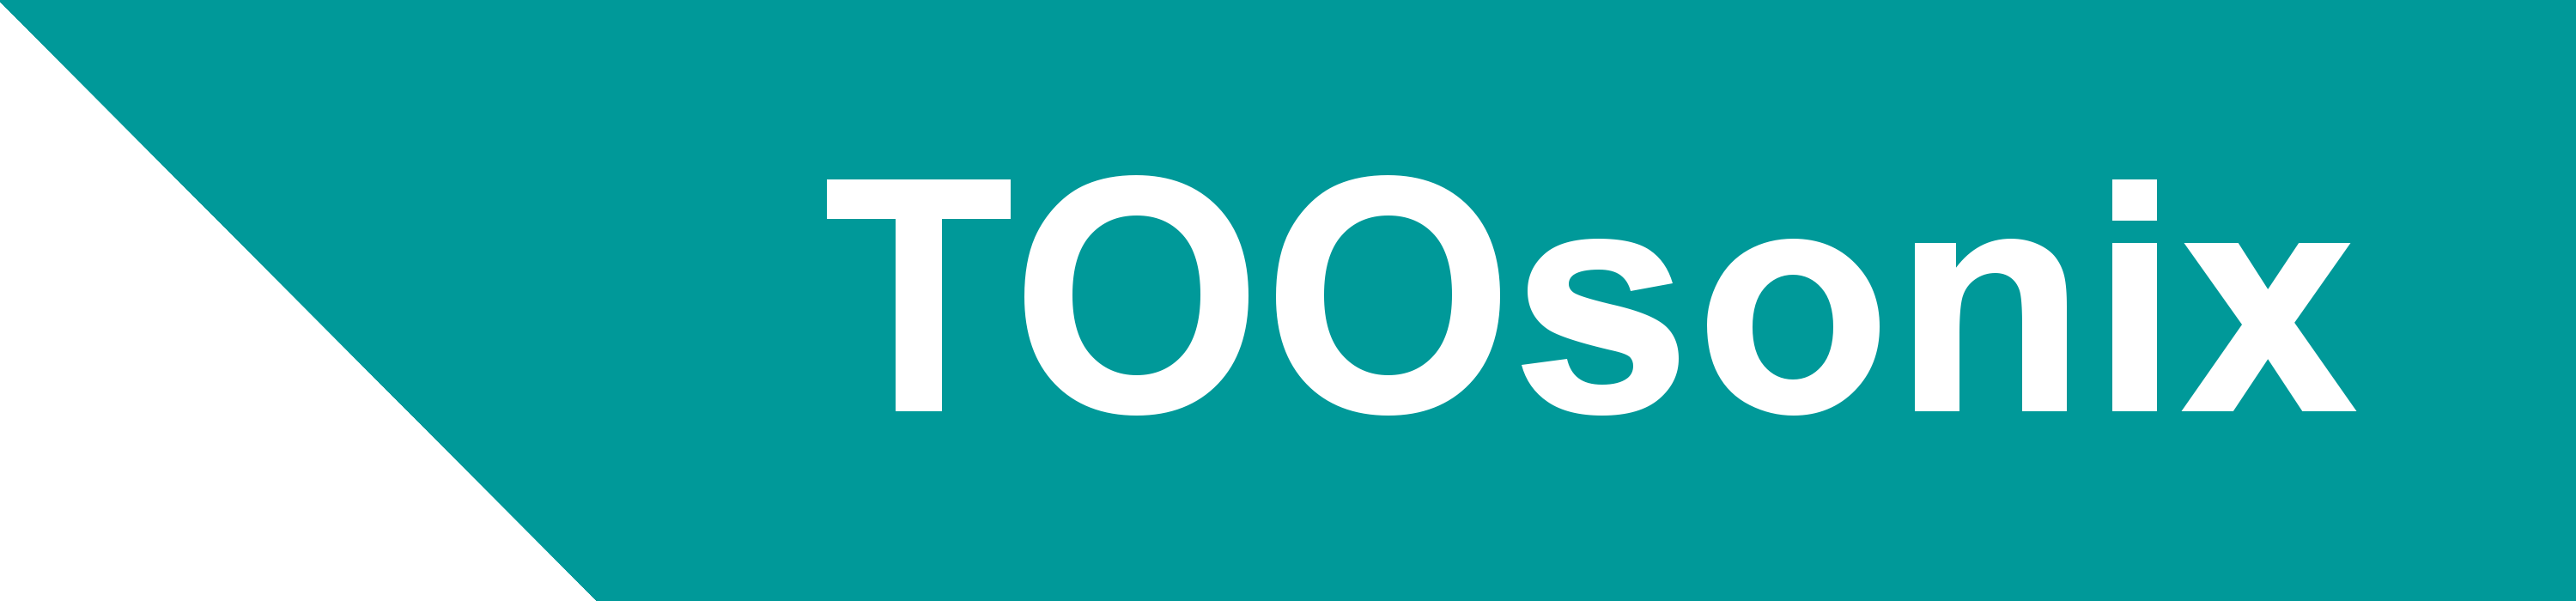 TOOsonix logo official